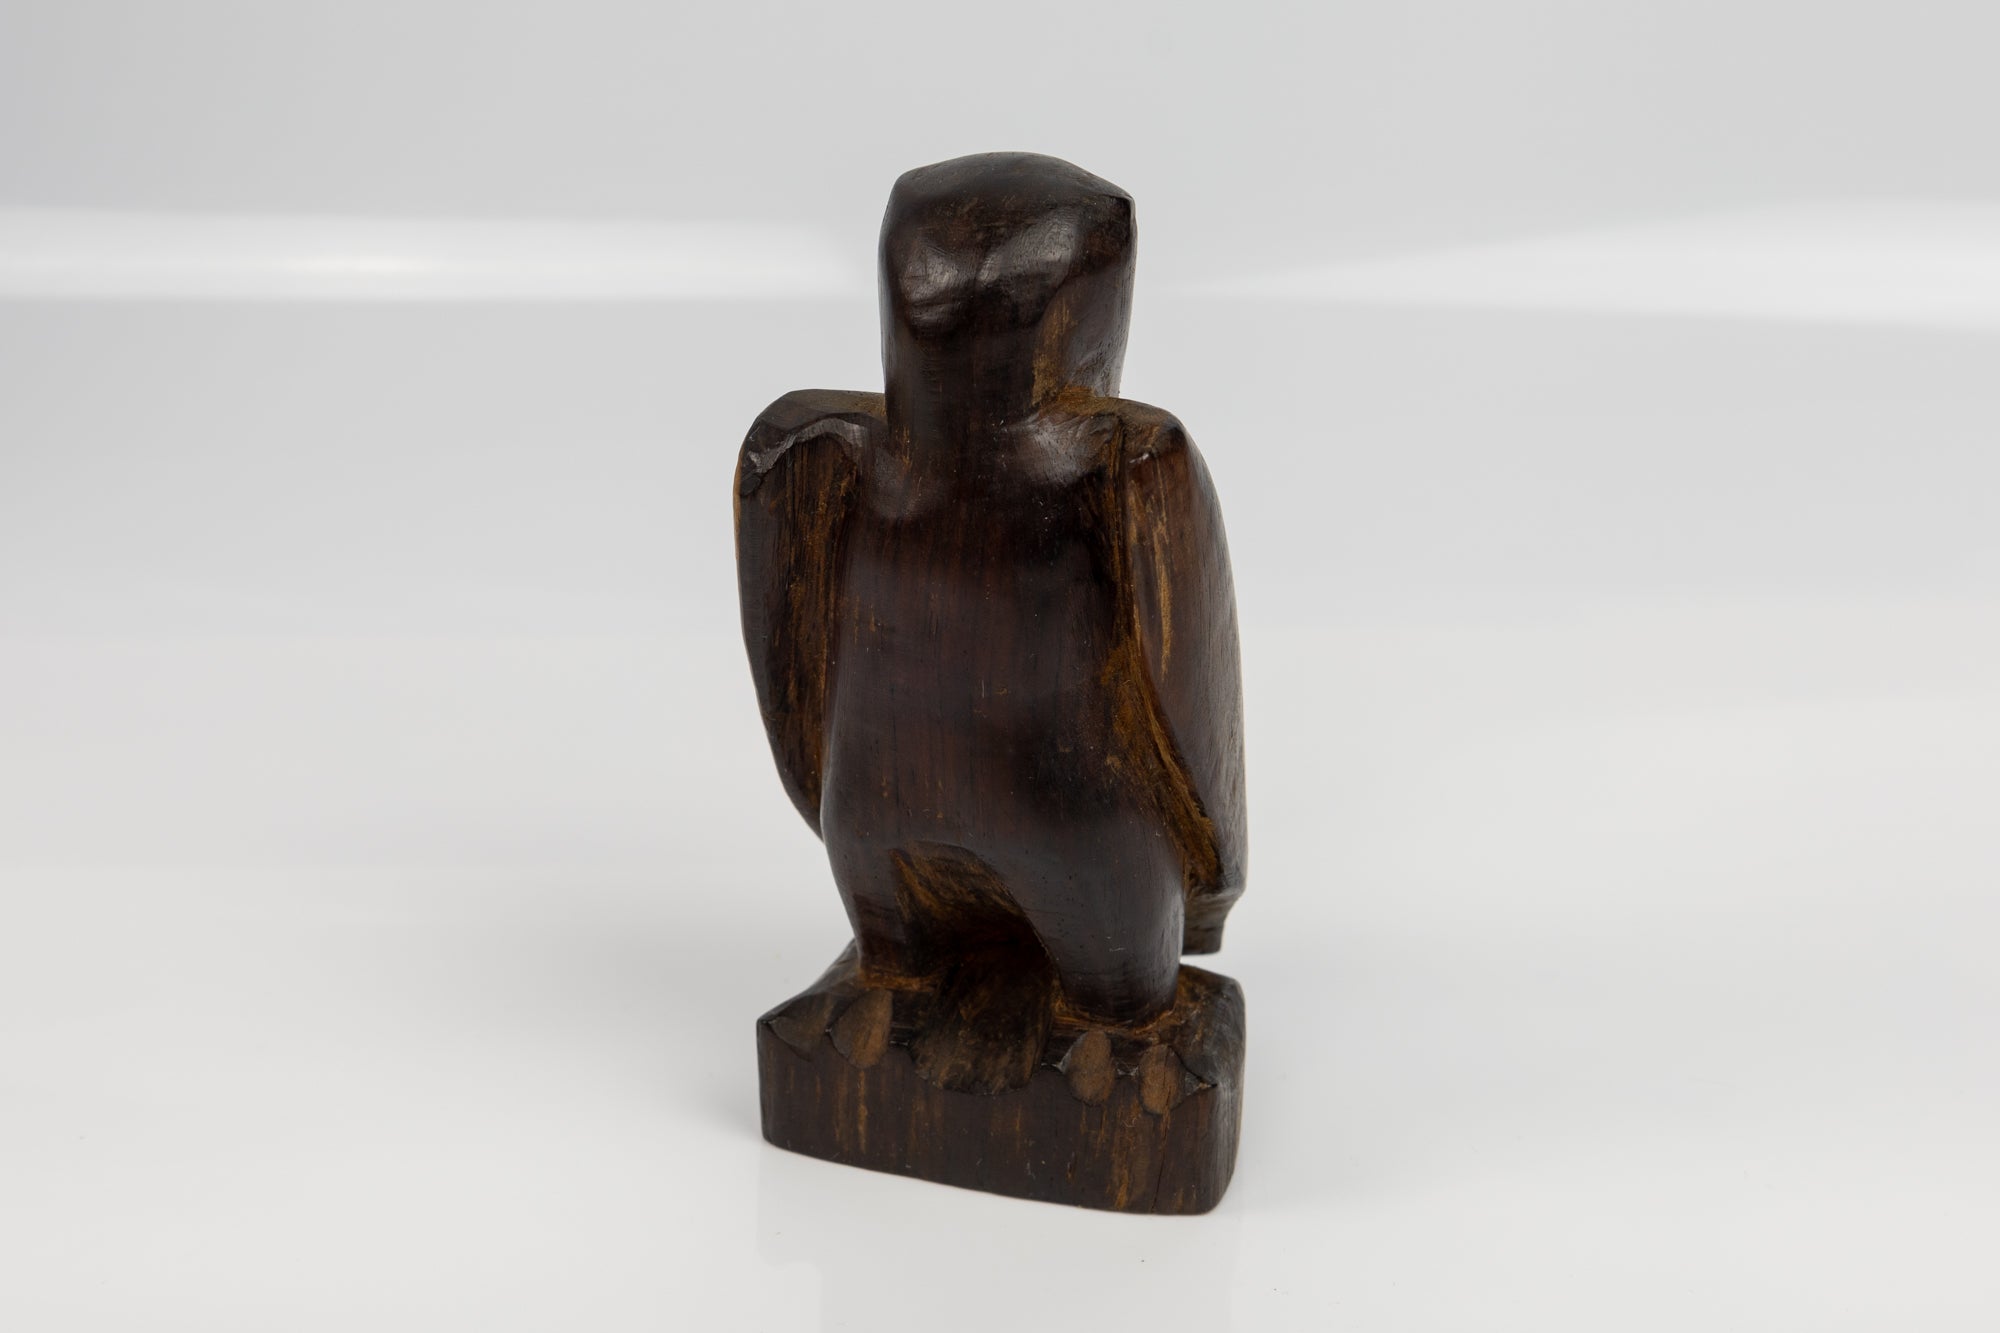 Rubberneck Figurine, Wood Carving